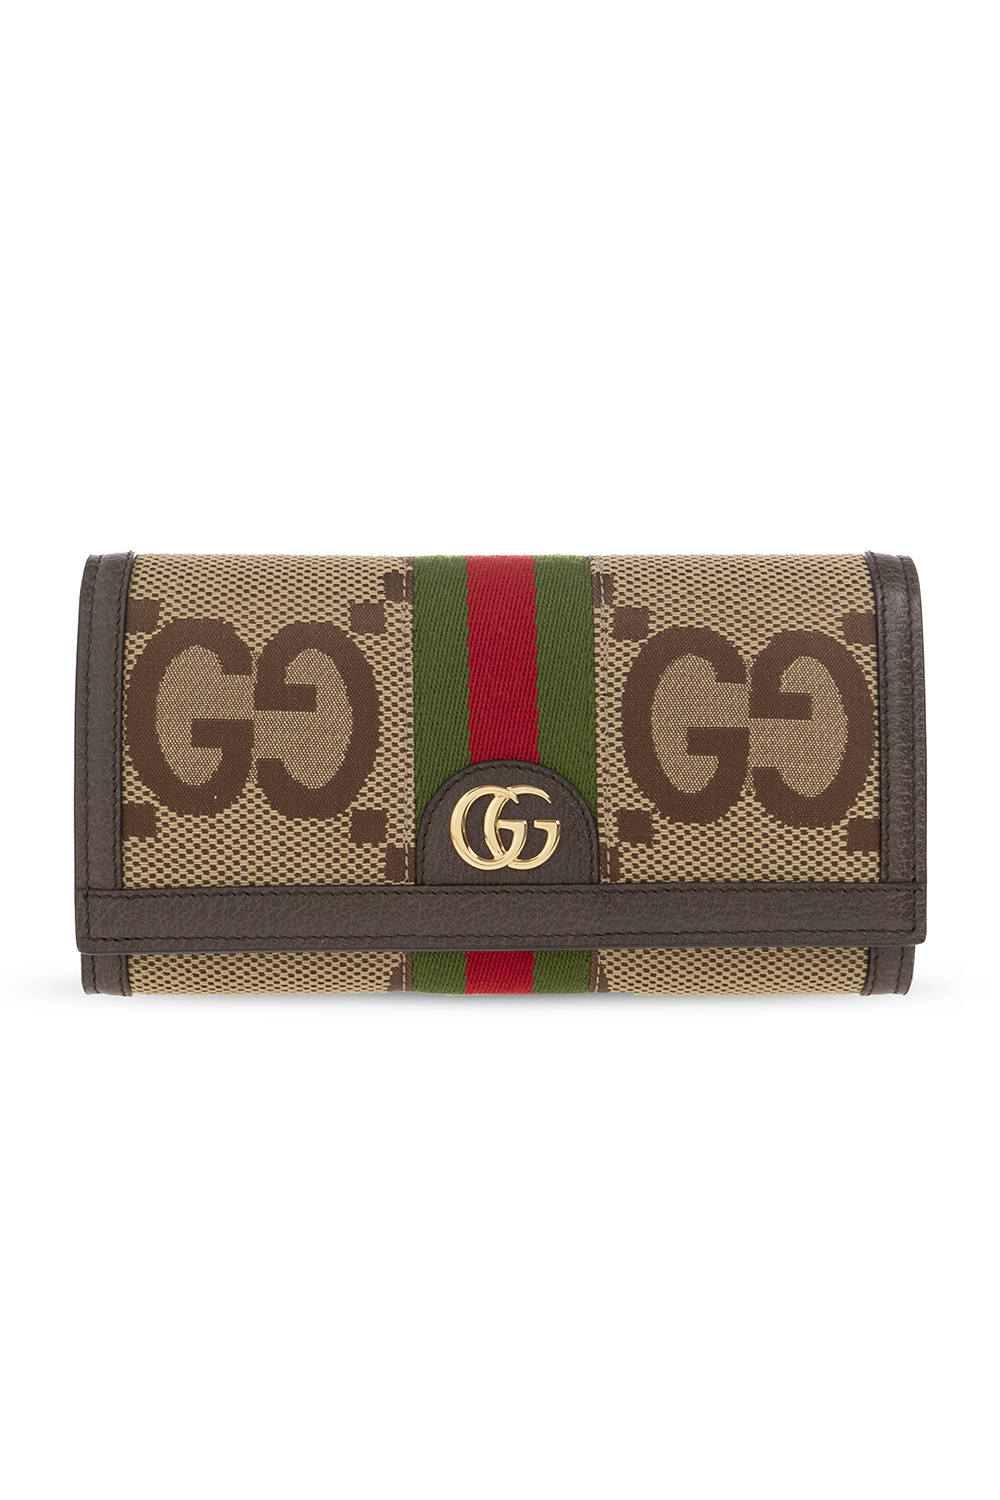 Gucci GG Canvas Handbag 07198 Beige Brown Leather Ladies GUCCI